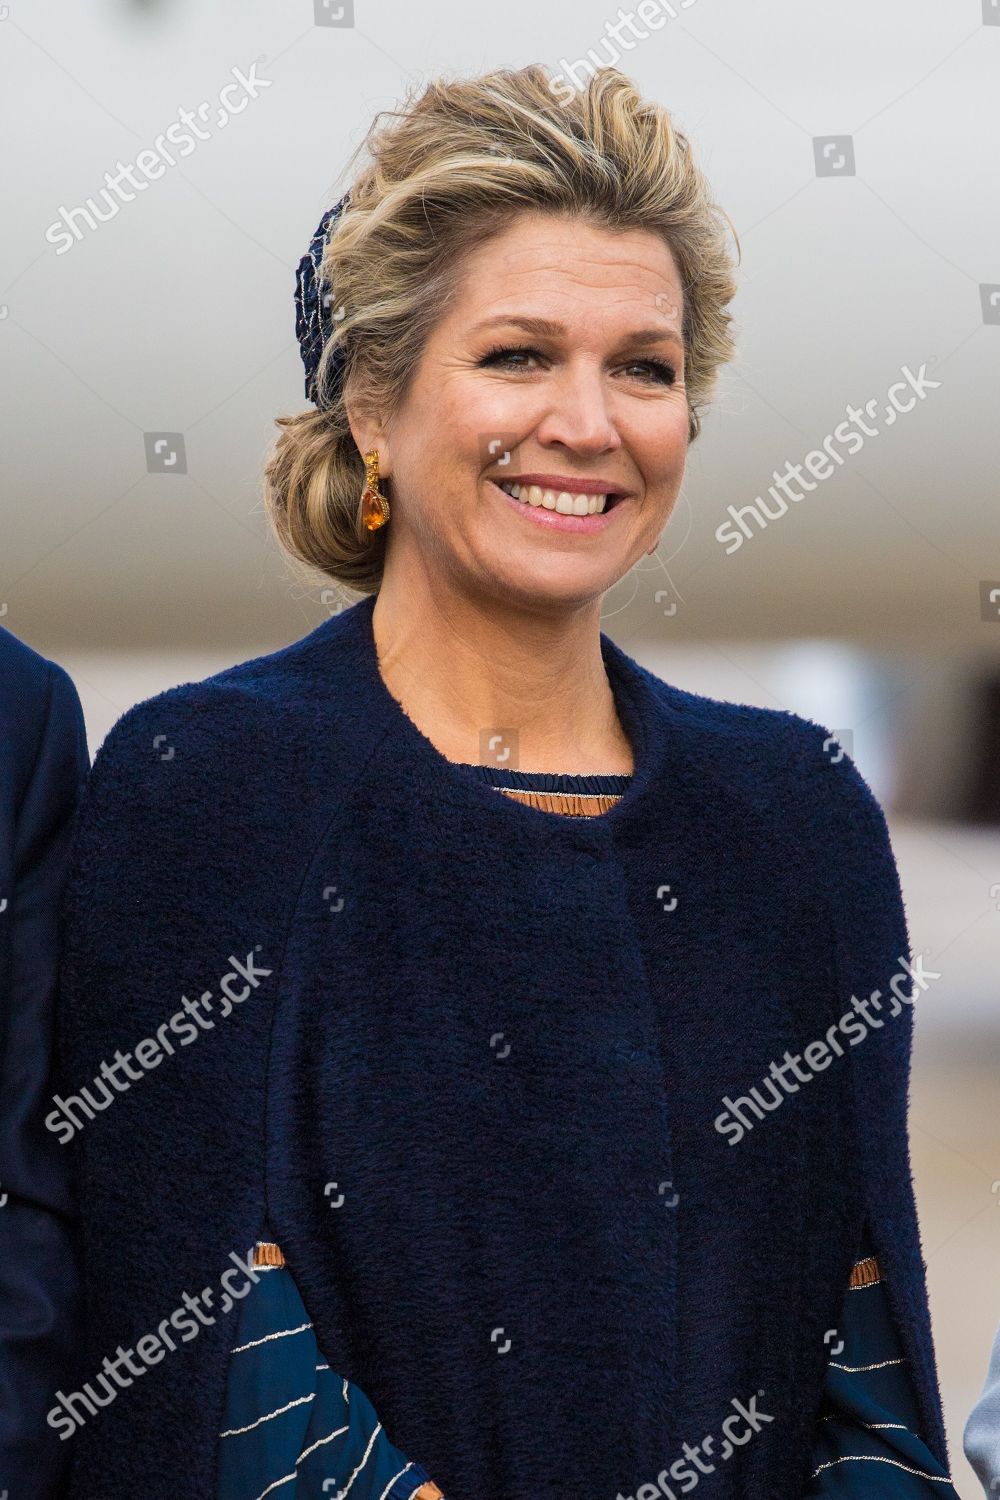 dutch-royals-visit-to-bremen-germany-shutterstock-editorial-10143597k.jpg